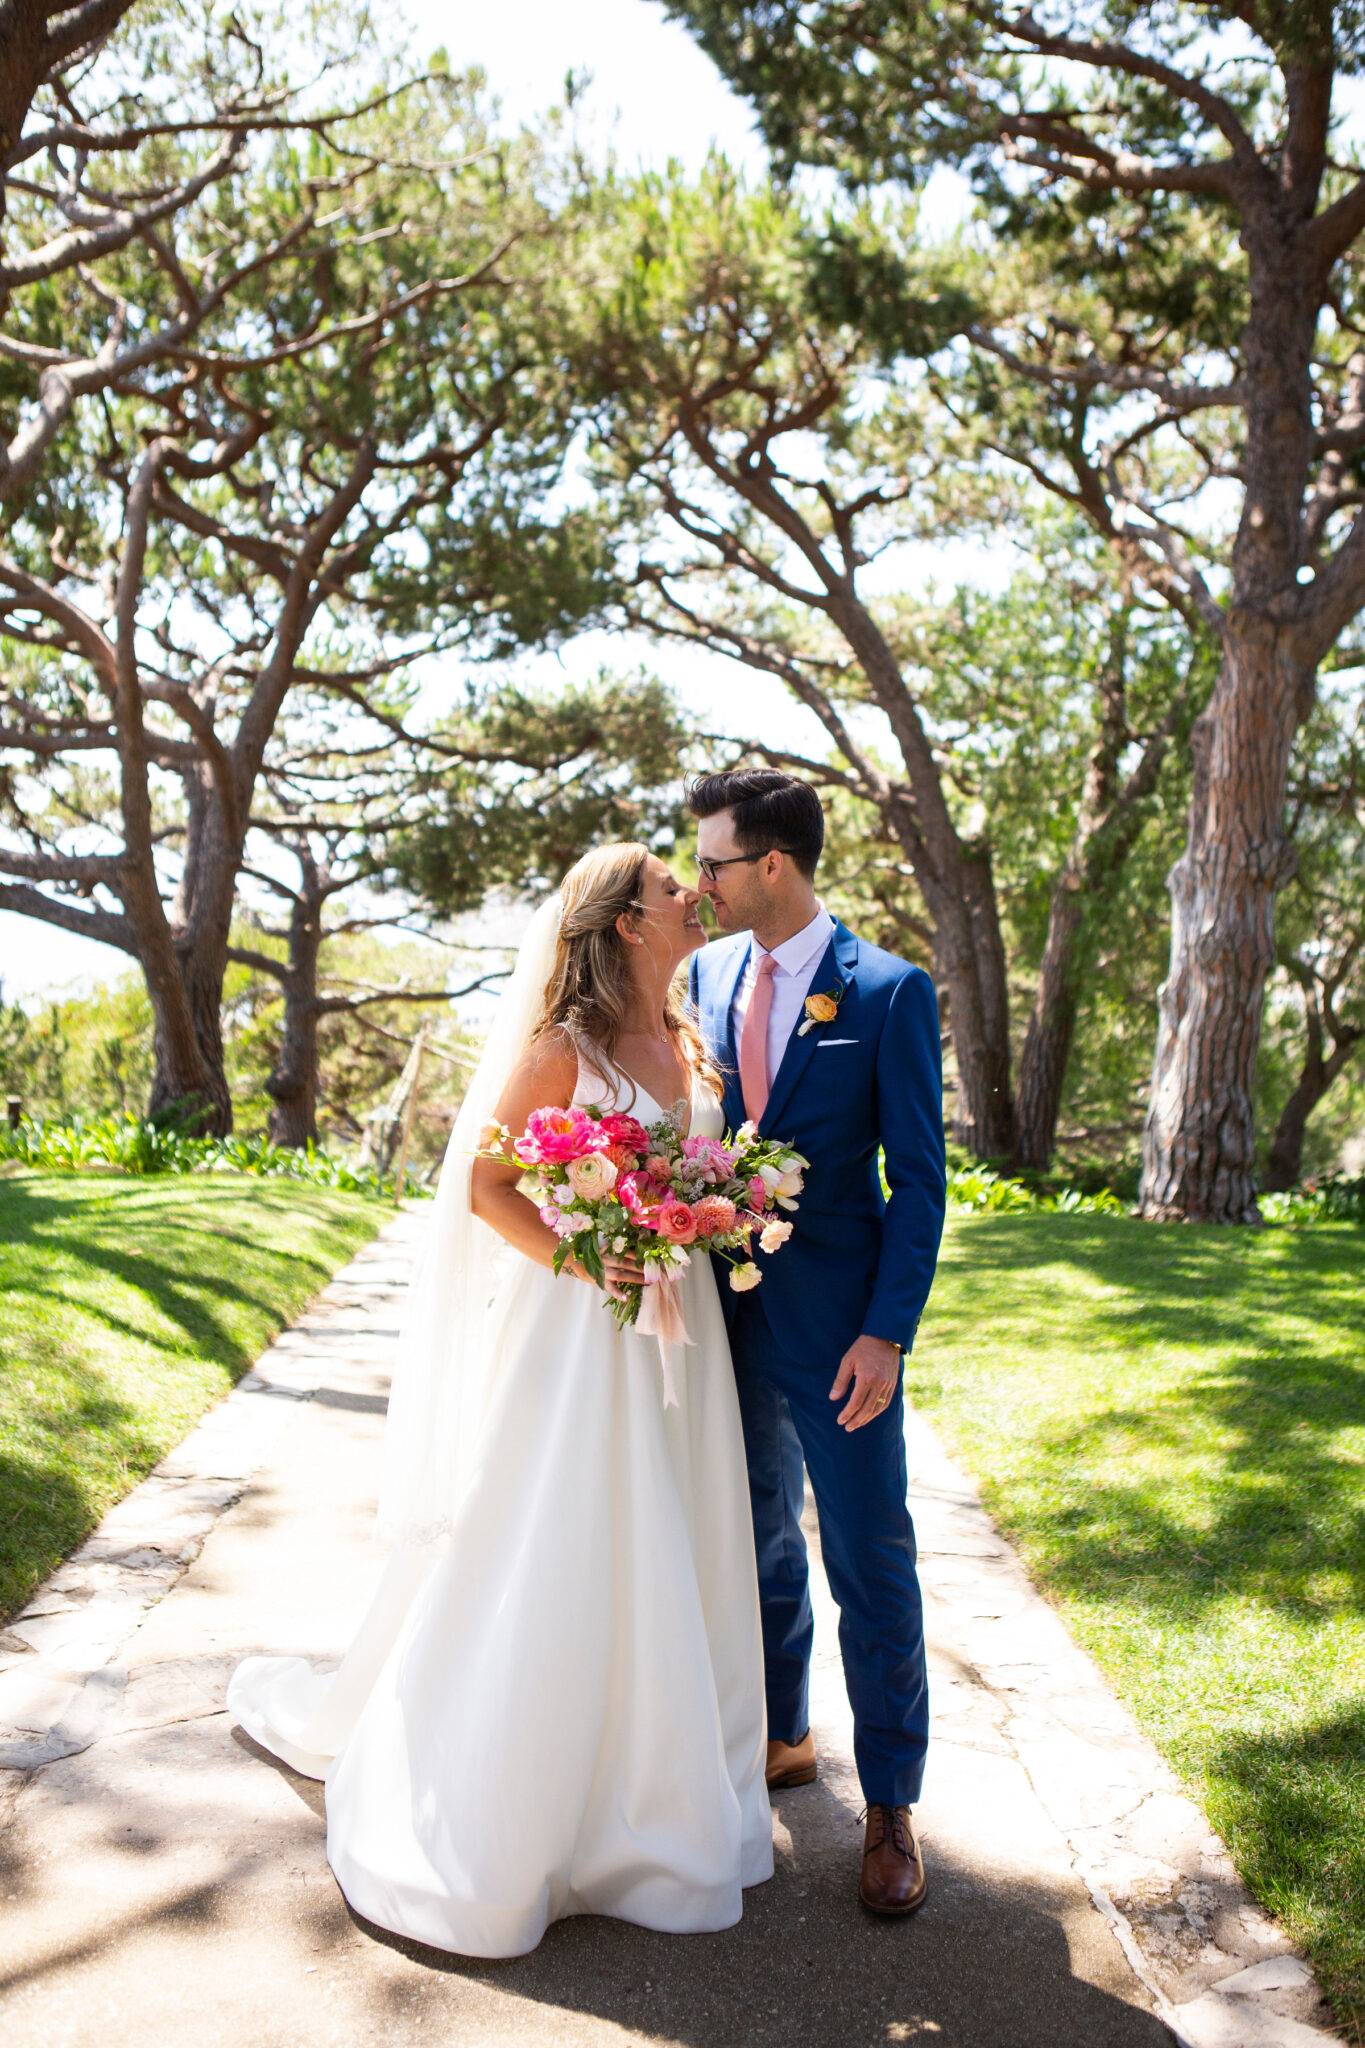 meagan and kyle's colorful california wedding wayfarers chapel